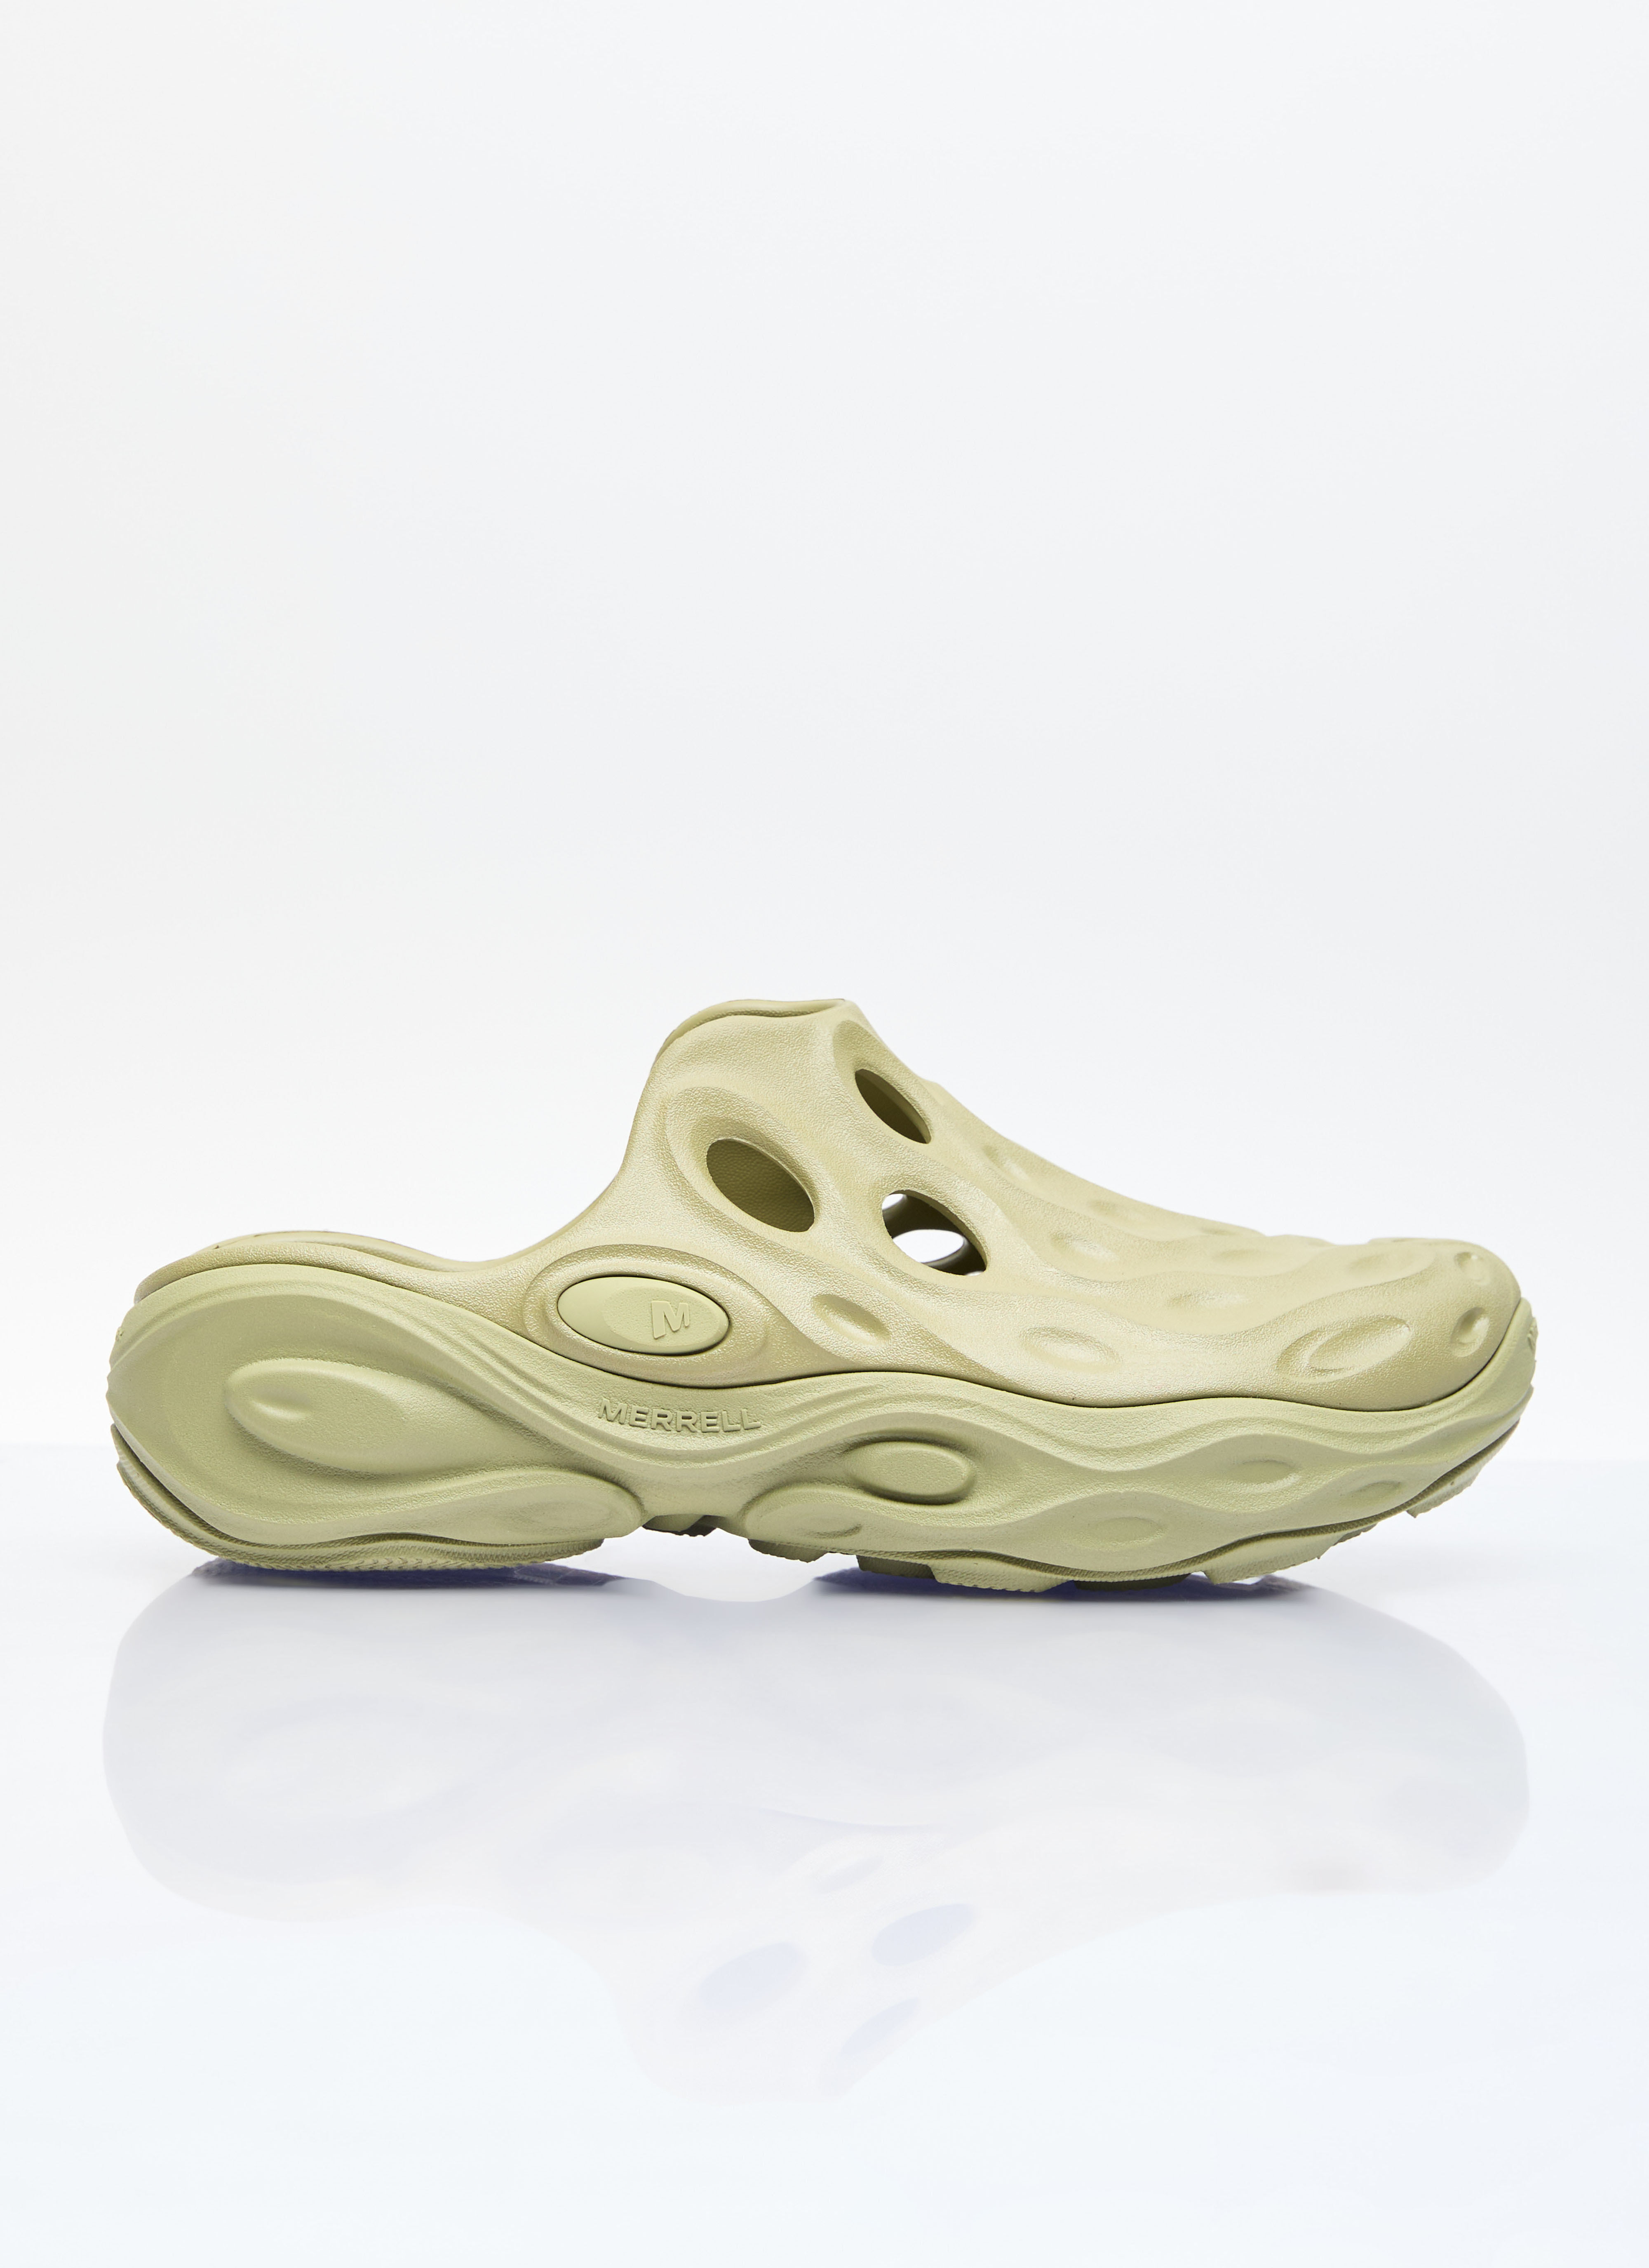 Oakley Factory Team Hydro Next Gen Slip-On Shoes White oft0156002